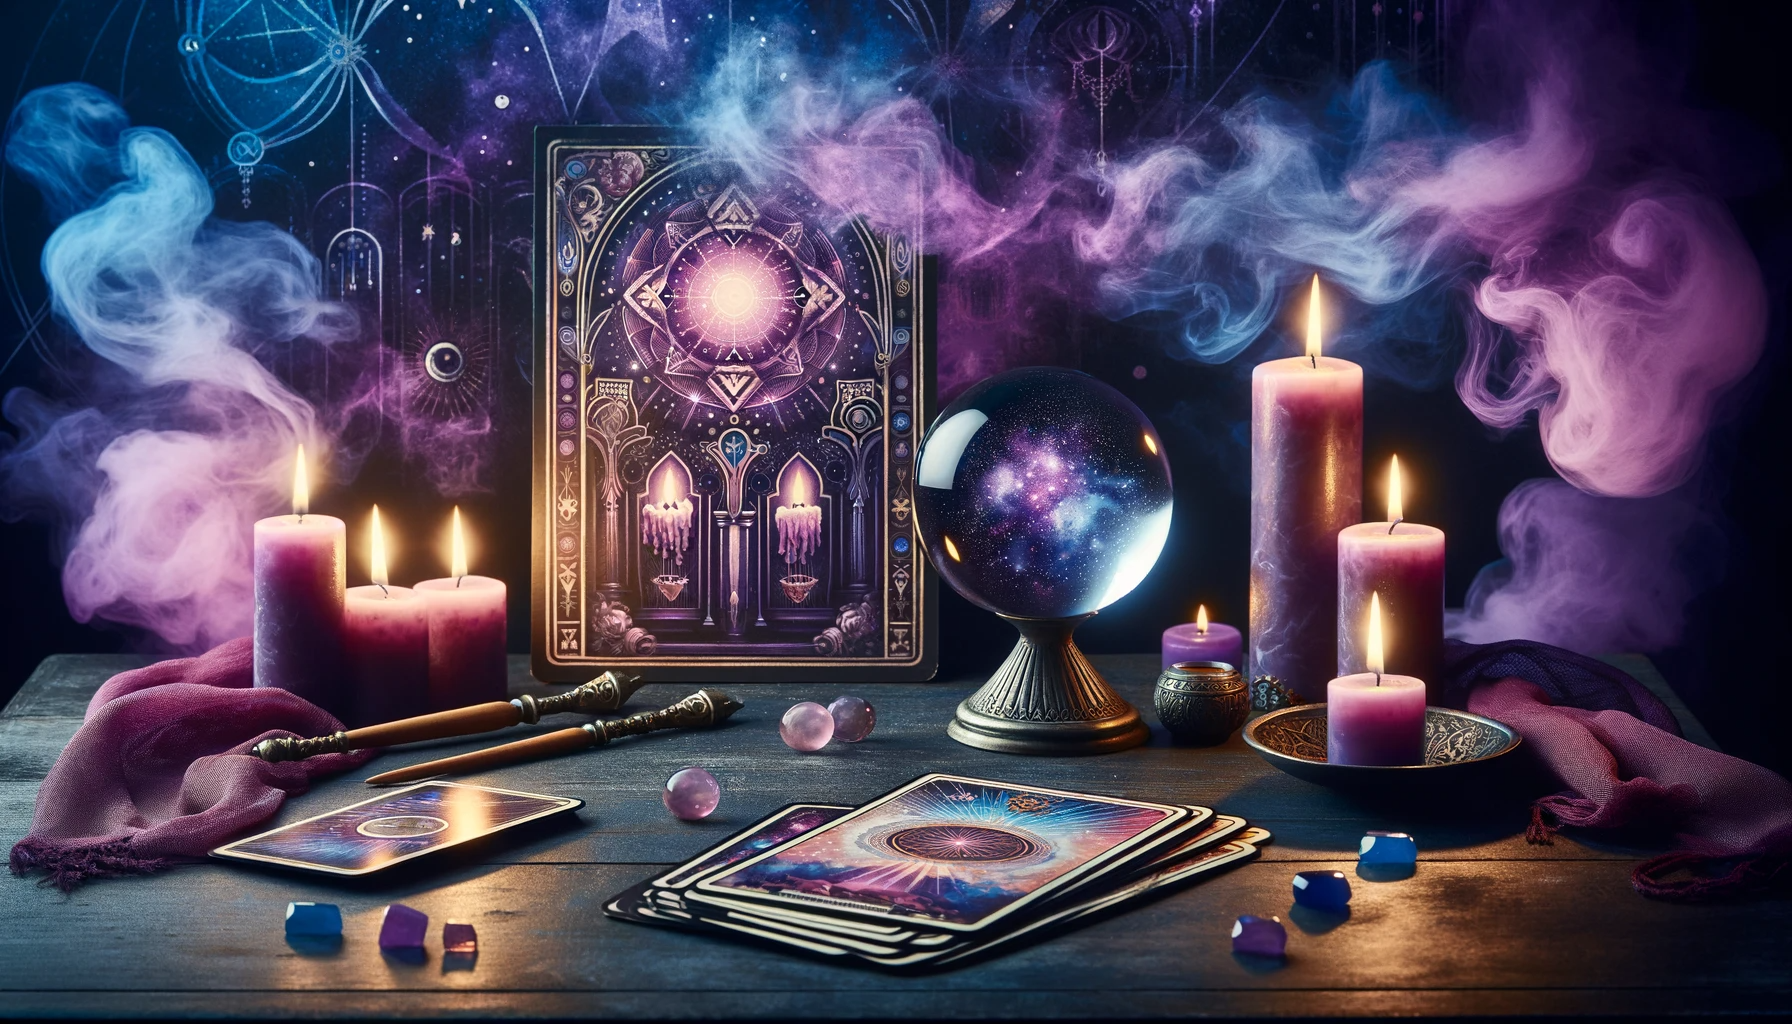 Mystical Tarot Cards and Crystal Ball